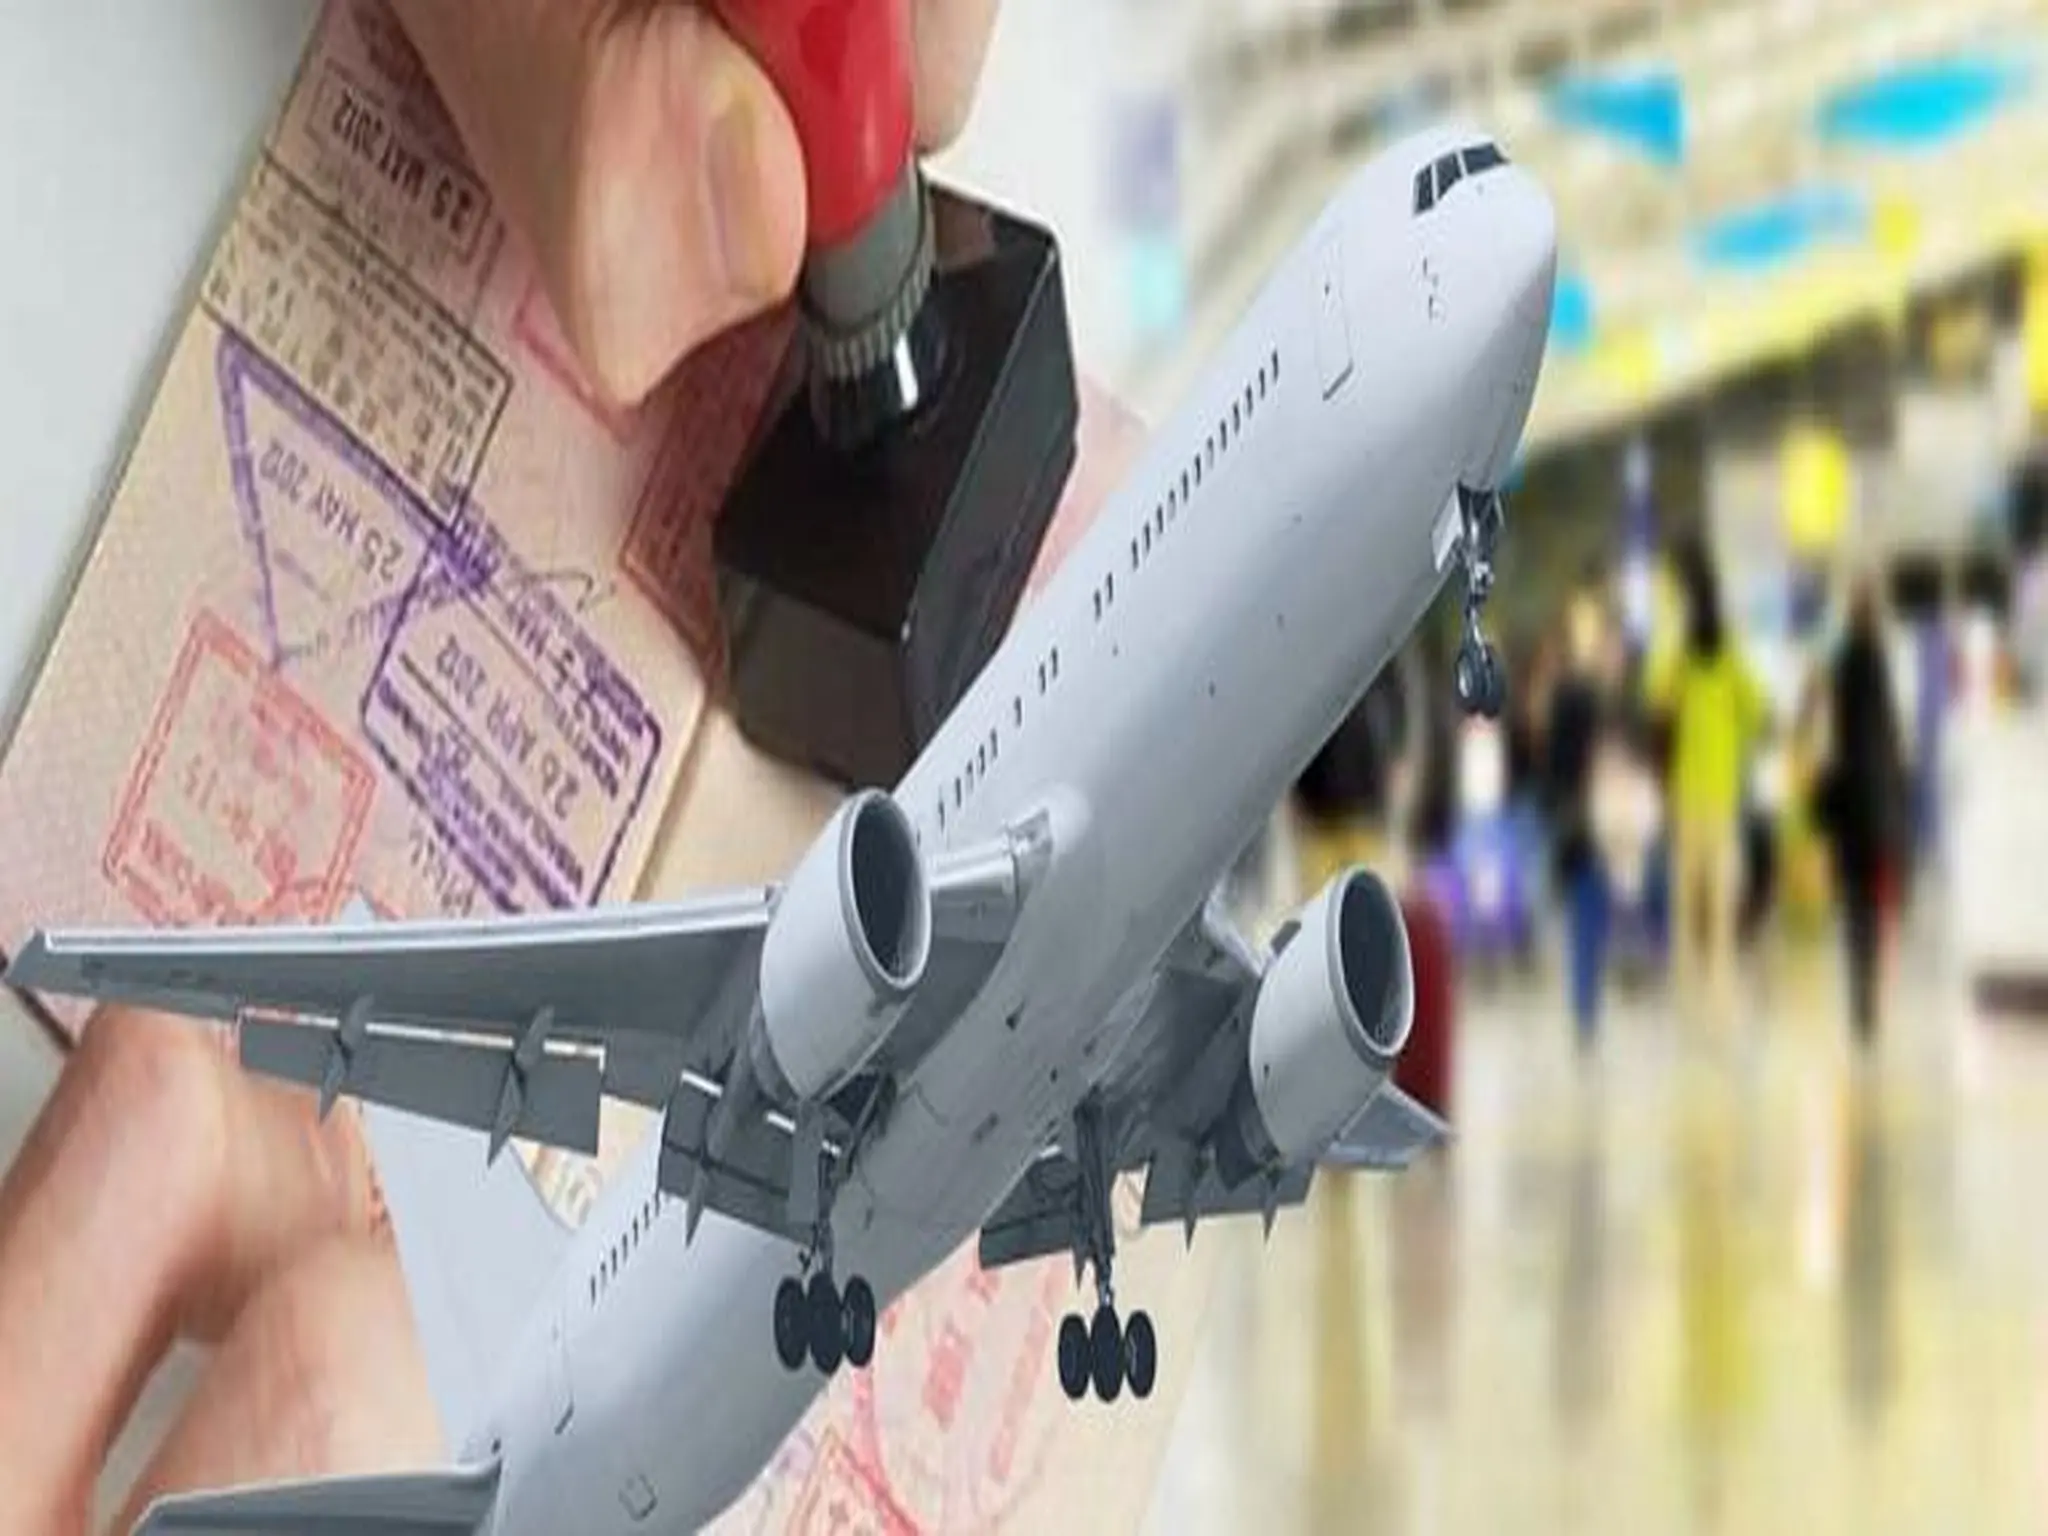 The UAE provides two types of transit visas for transit travelers